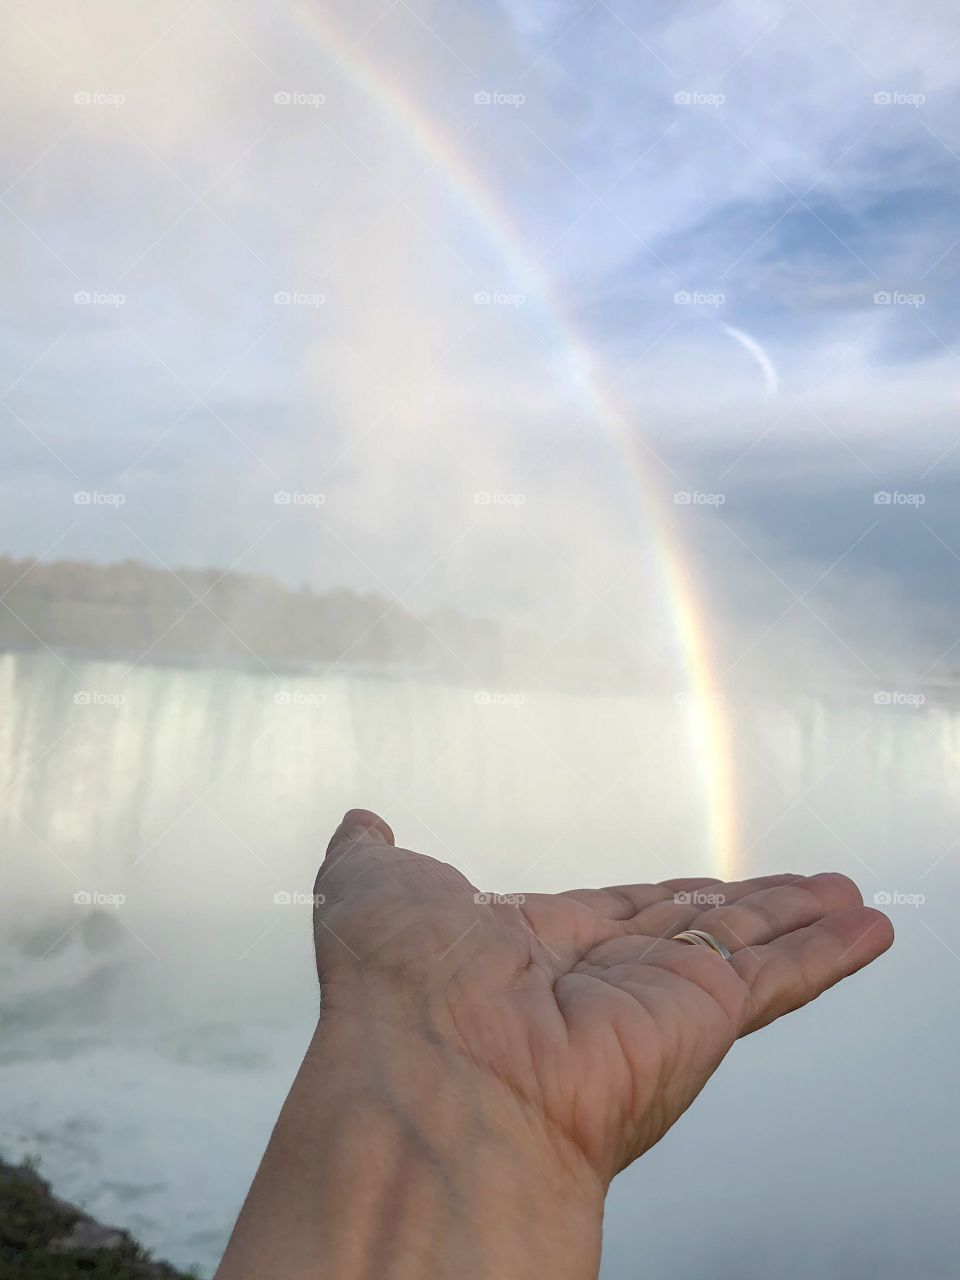 A hand pretending to get a rainbow in Niagara Falls